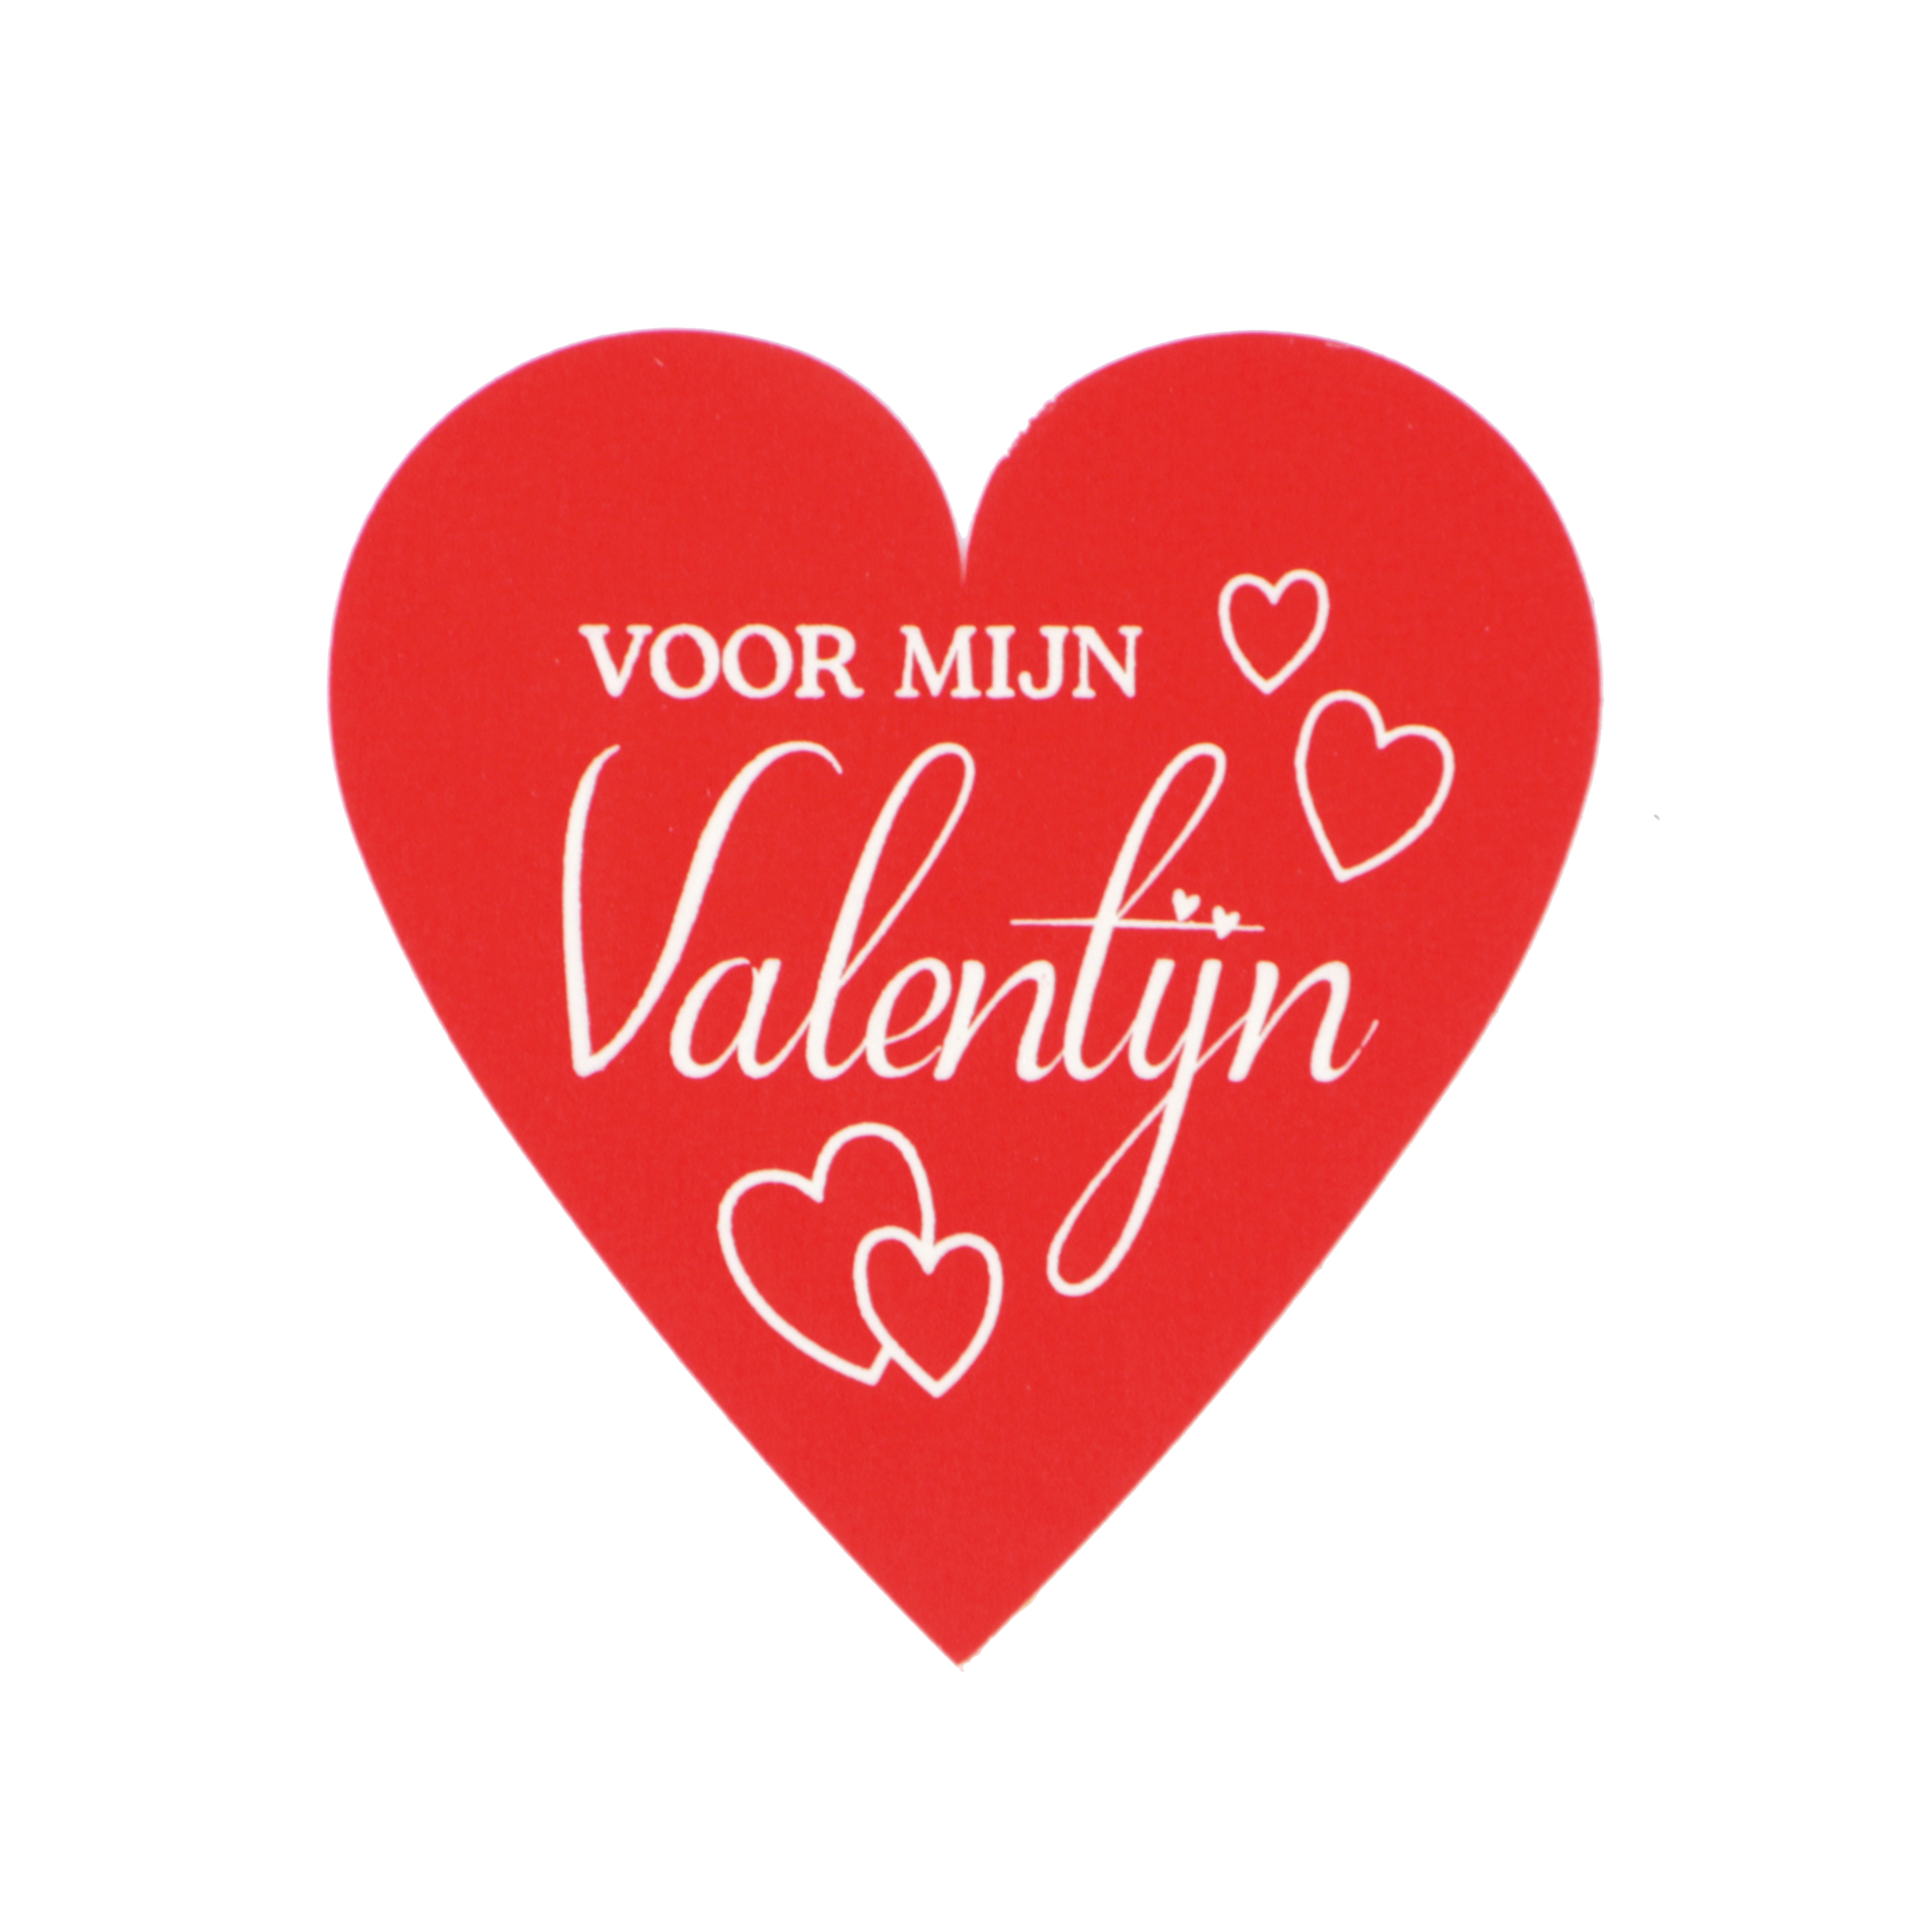 Picture for category Valentijn etiketten